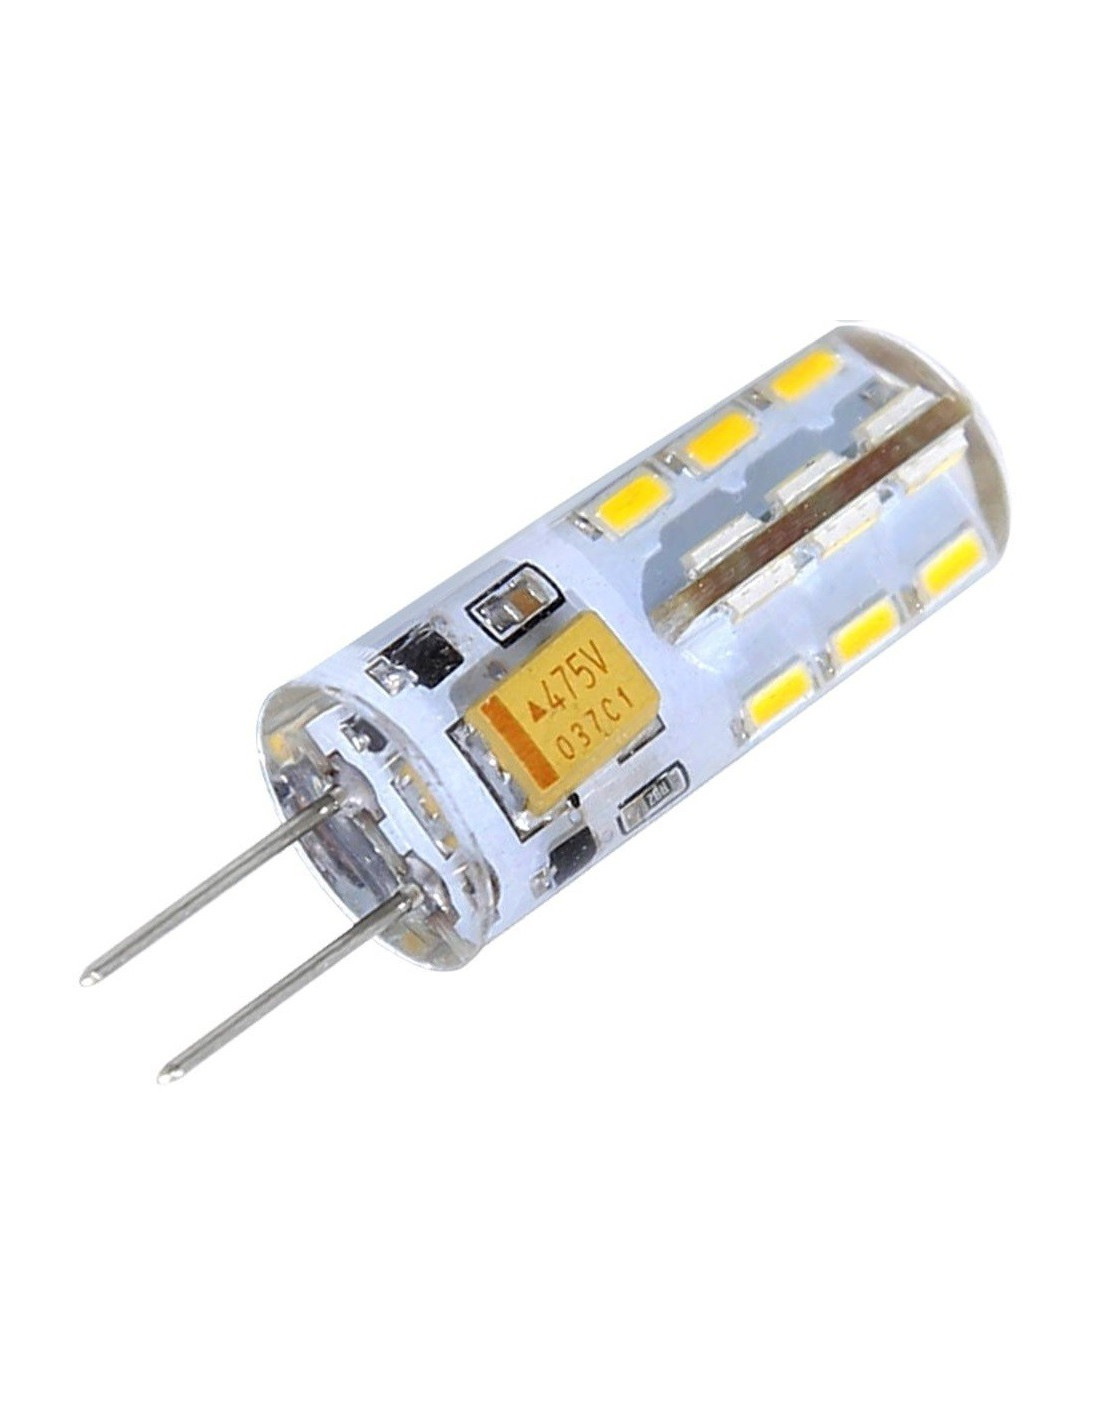 G4 LED mini stecksockellampe pera Silicia cob 12v 110/200lm bombilla lampara 